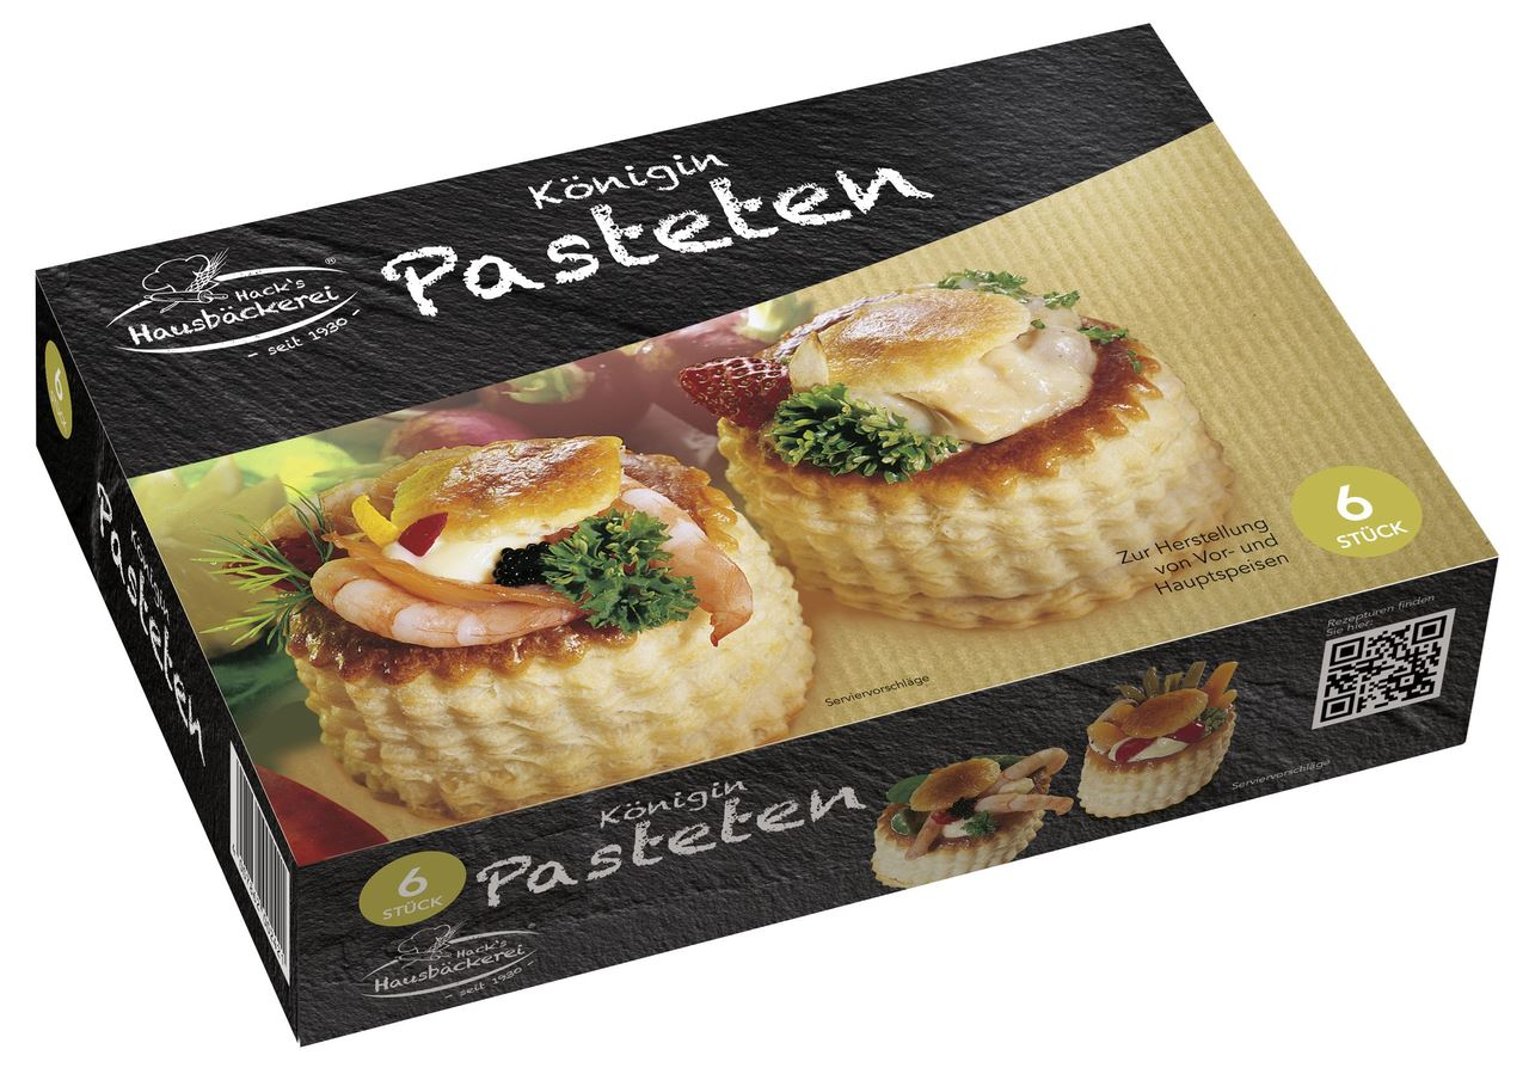 Hack's Hausbäckerei Blätterteig Pasteten Königin 6 Stück à 25 g 12 x 150 g Packungen